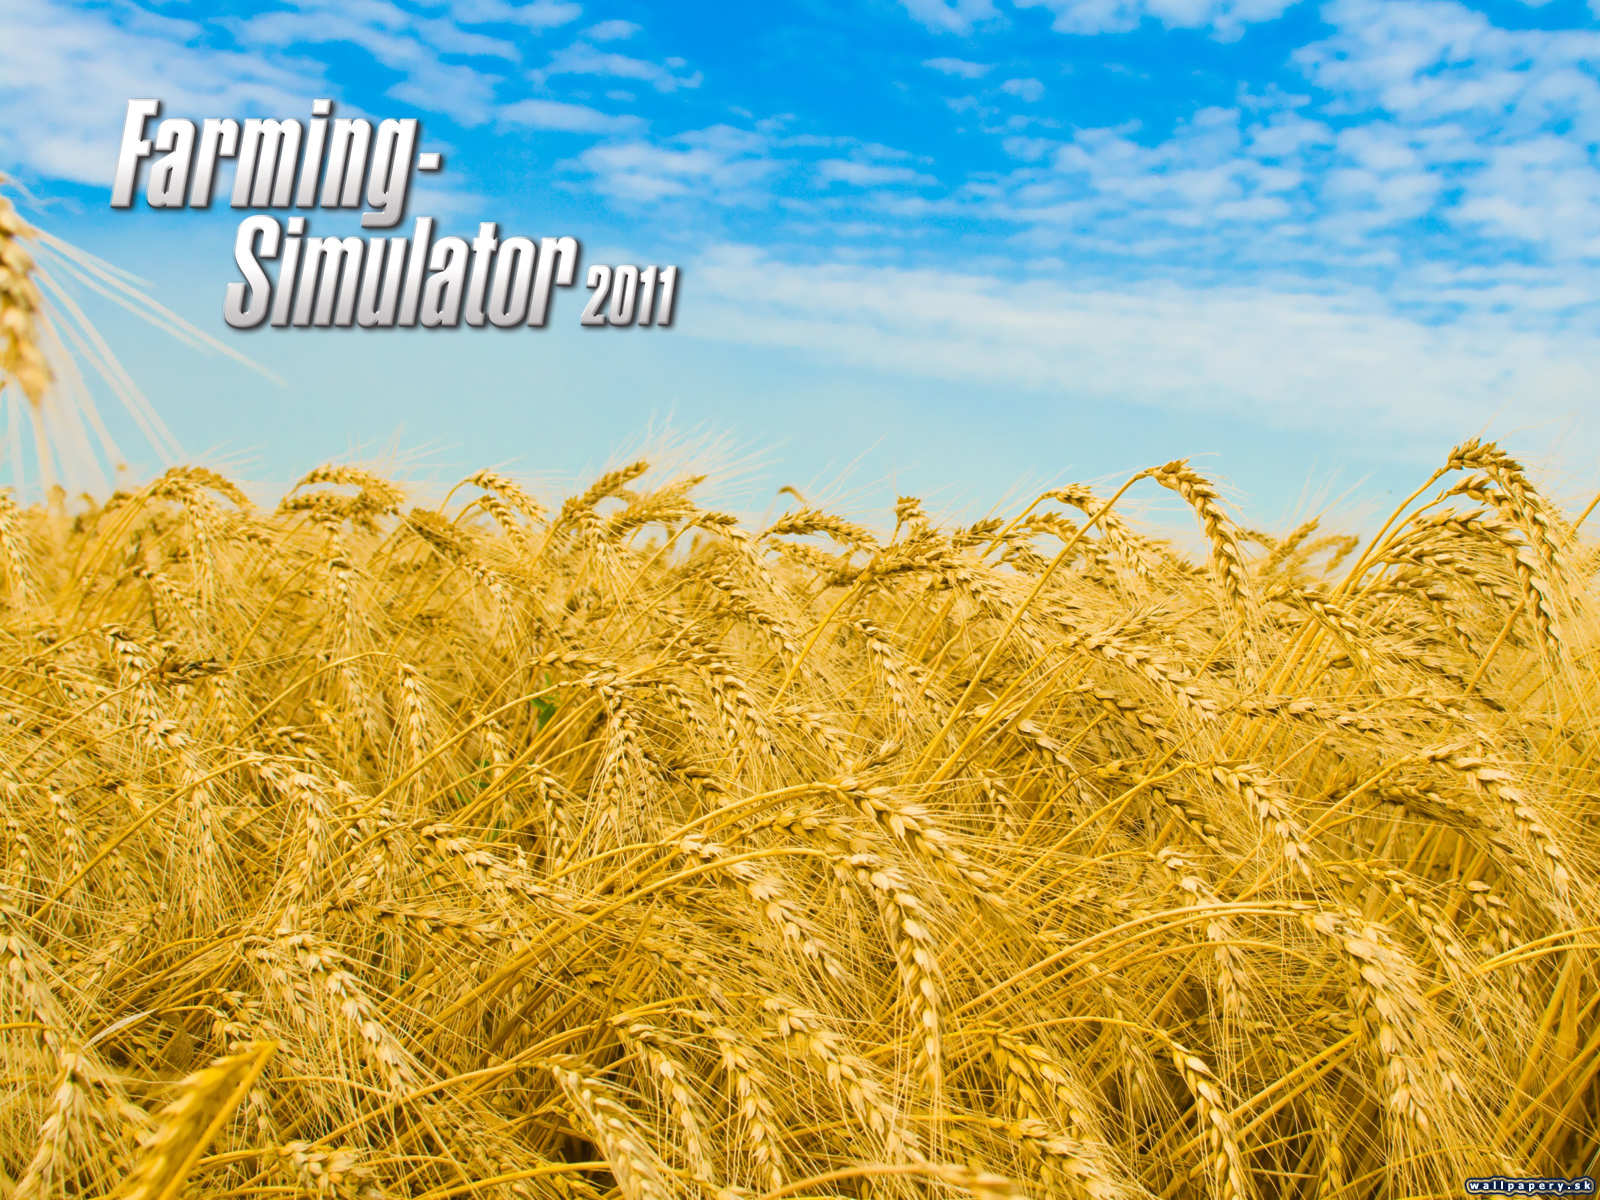 Farming Simulator 2011 - wallpaper 15